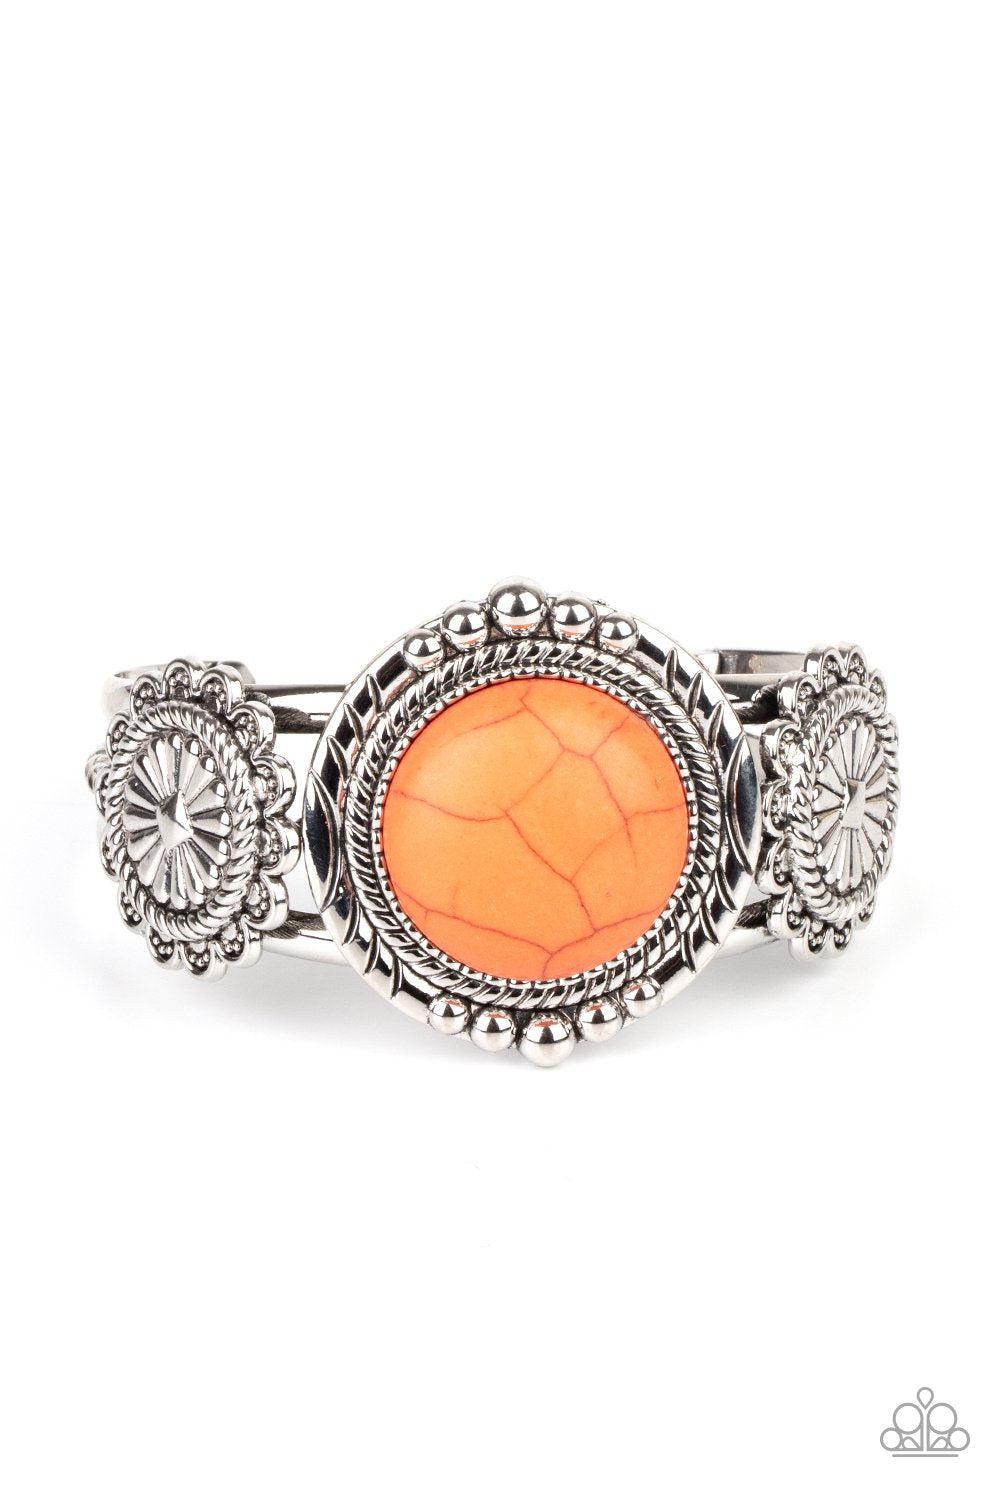 Mojave Motif Orange Stone Cuff Bracelet - Paparazzi Accessories- lightbox - CarasShop.com - $5 Jewelry by Cara Jewels